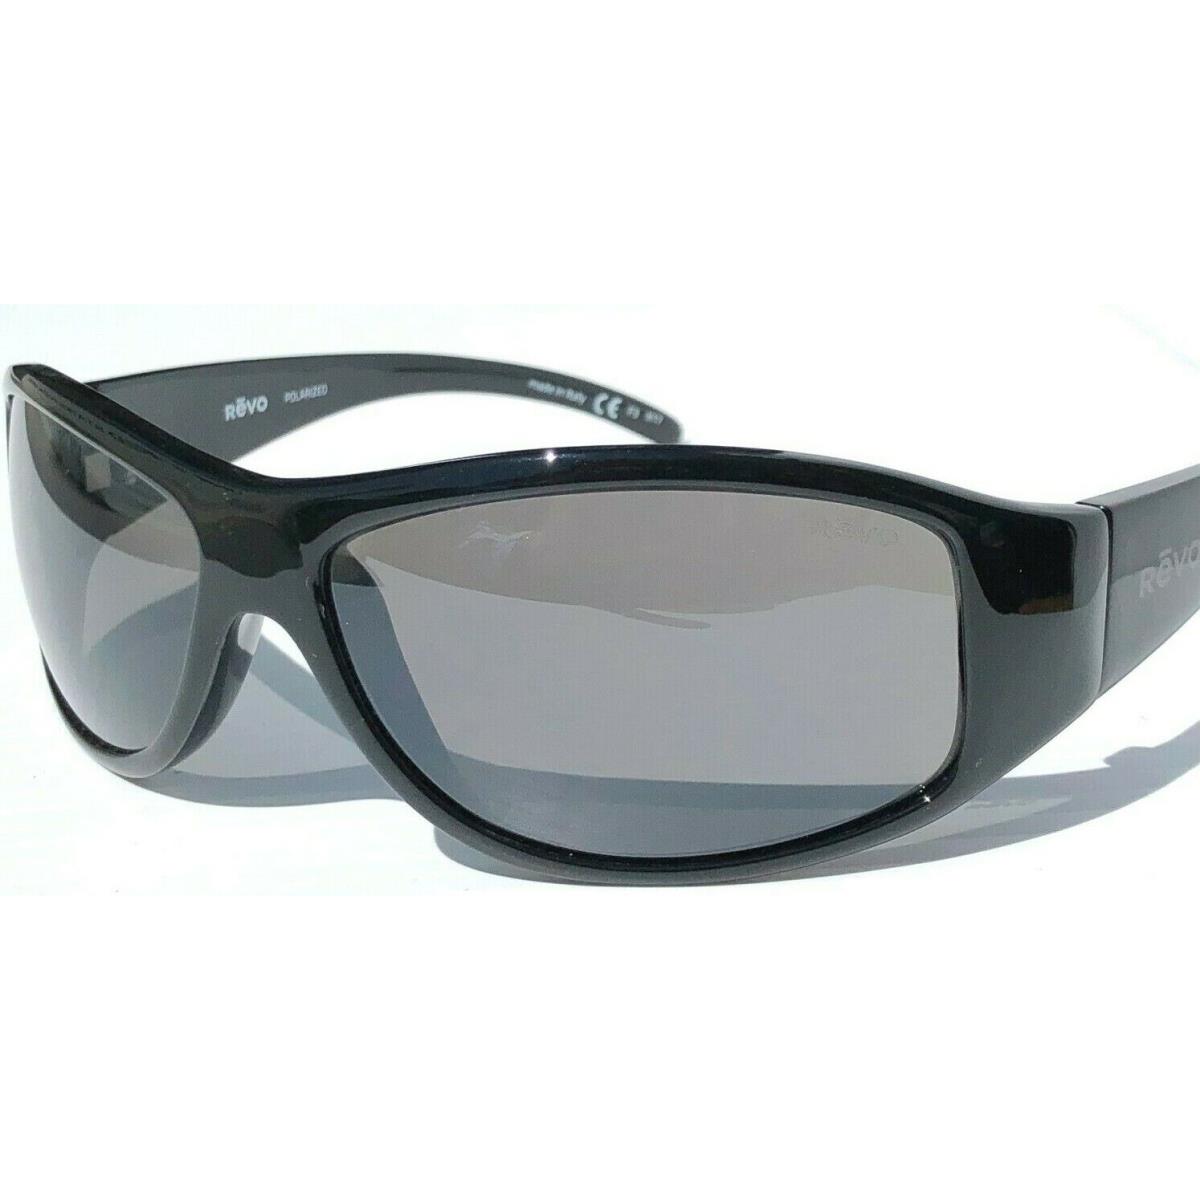 Revo sunglasses Tander - Black Frame, Black Lens